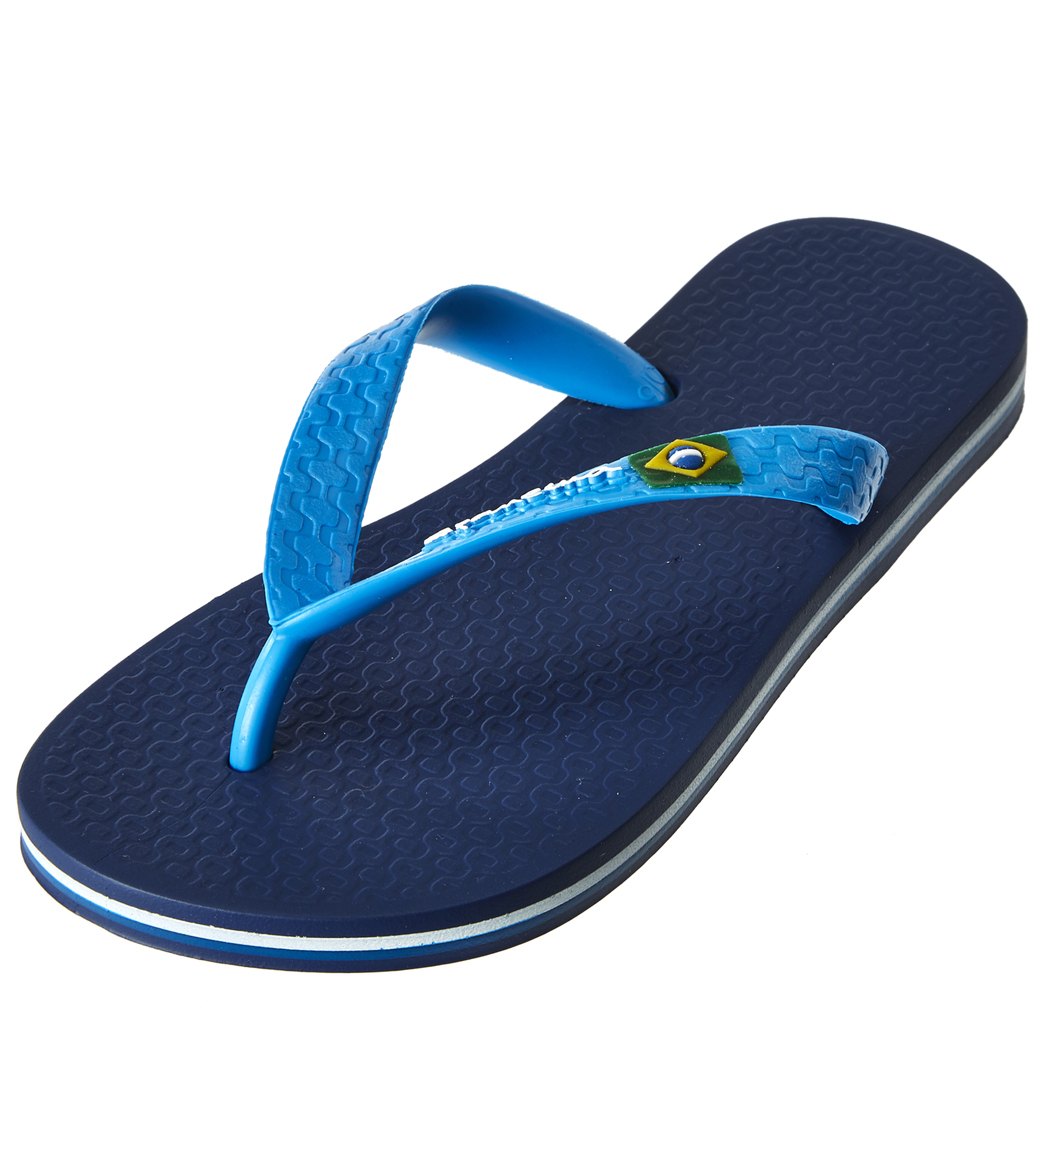 Ipanema Boys' Brazil Flip Flop - Blue/Blue 9 - Swimoutlet.com